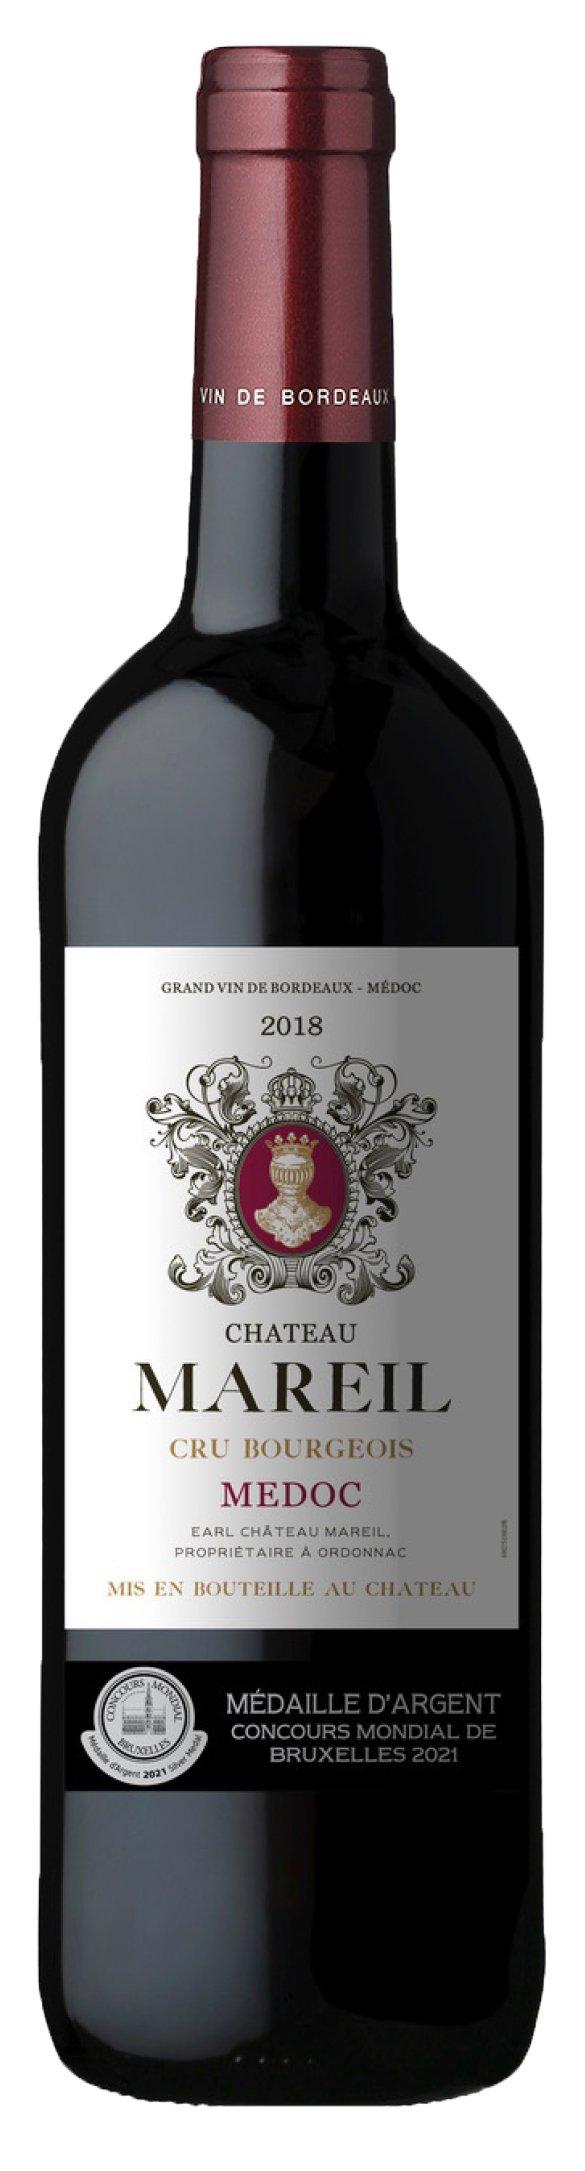 Chateau Mareil 2018 Medoc, Cru Bourgeois | Wine Express